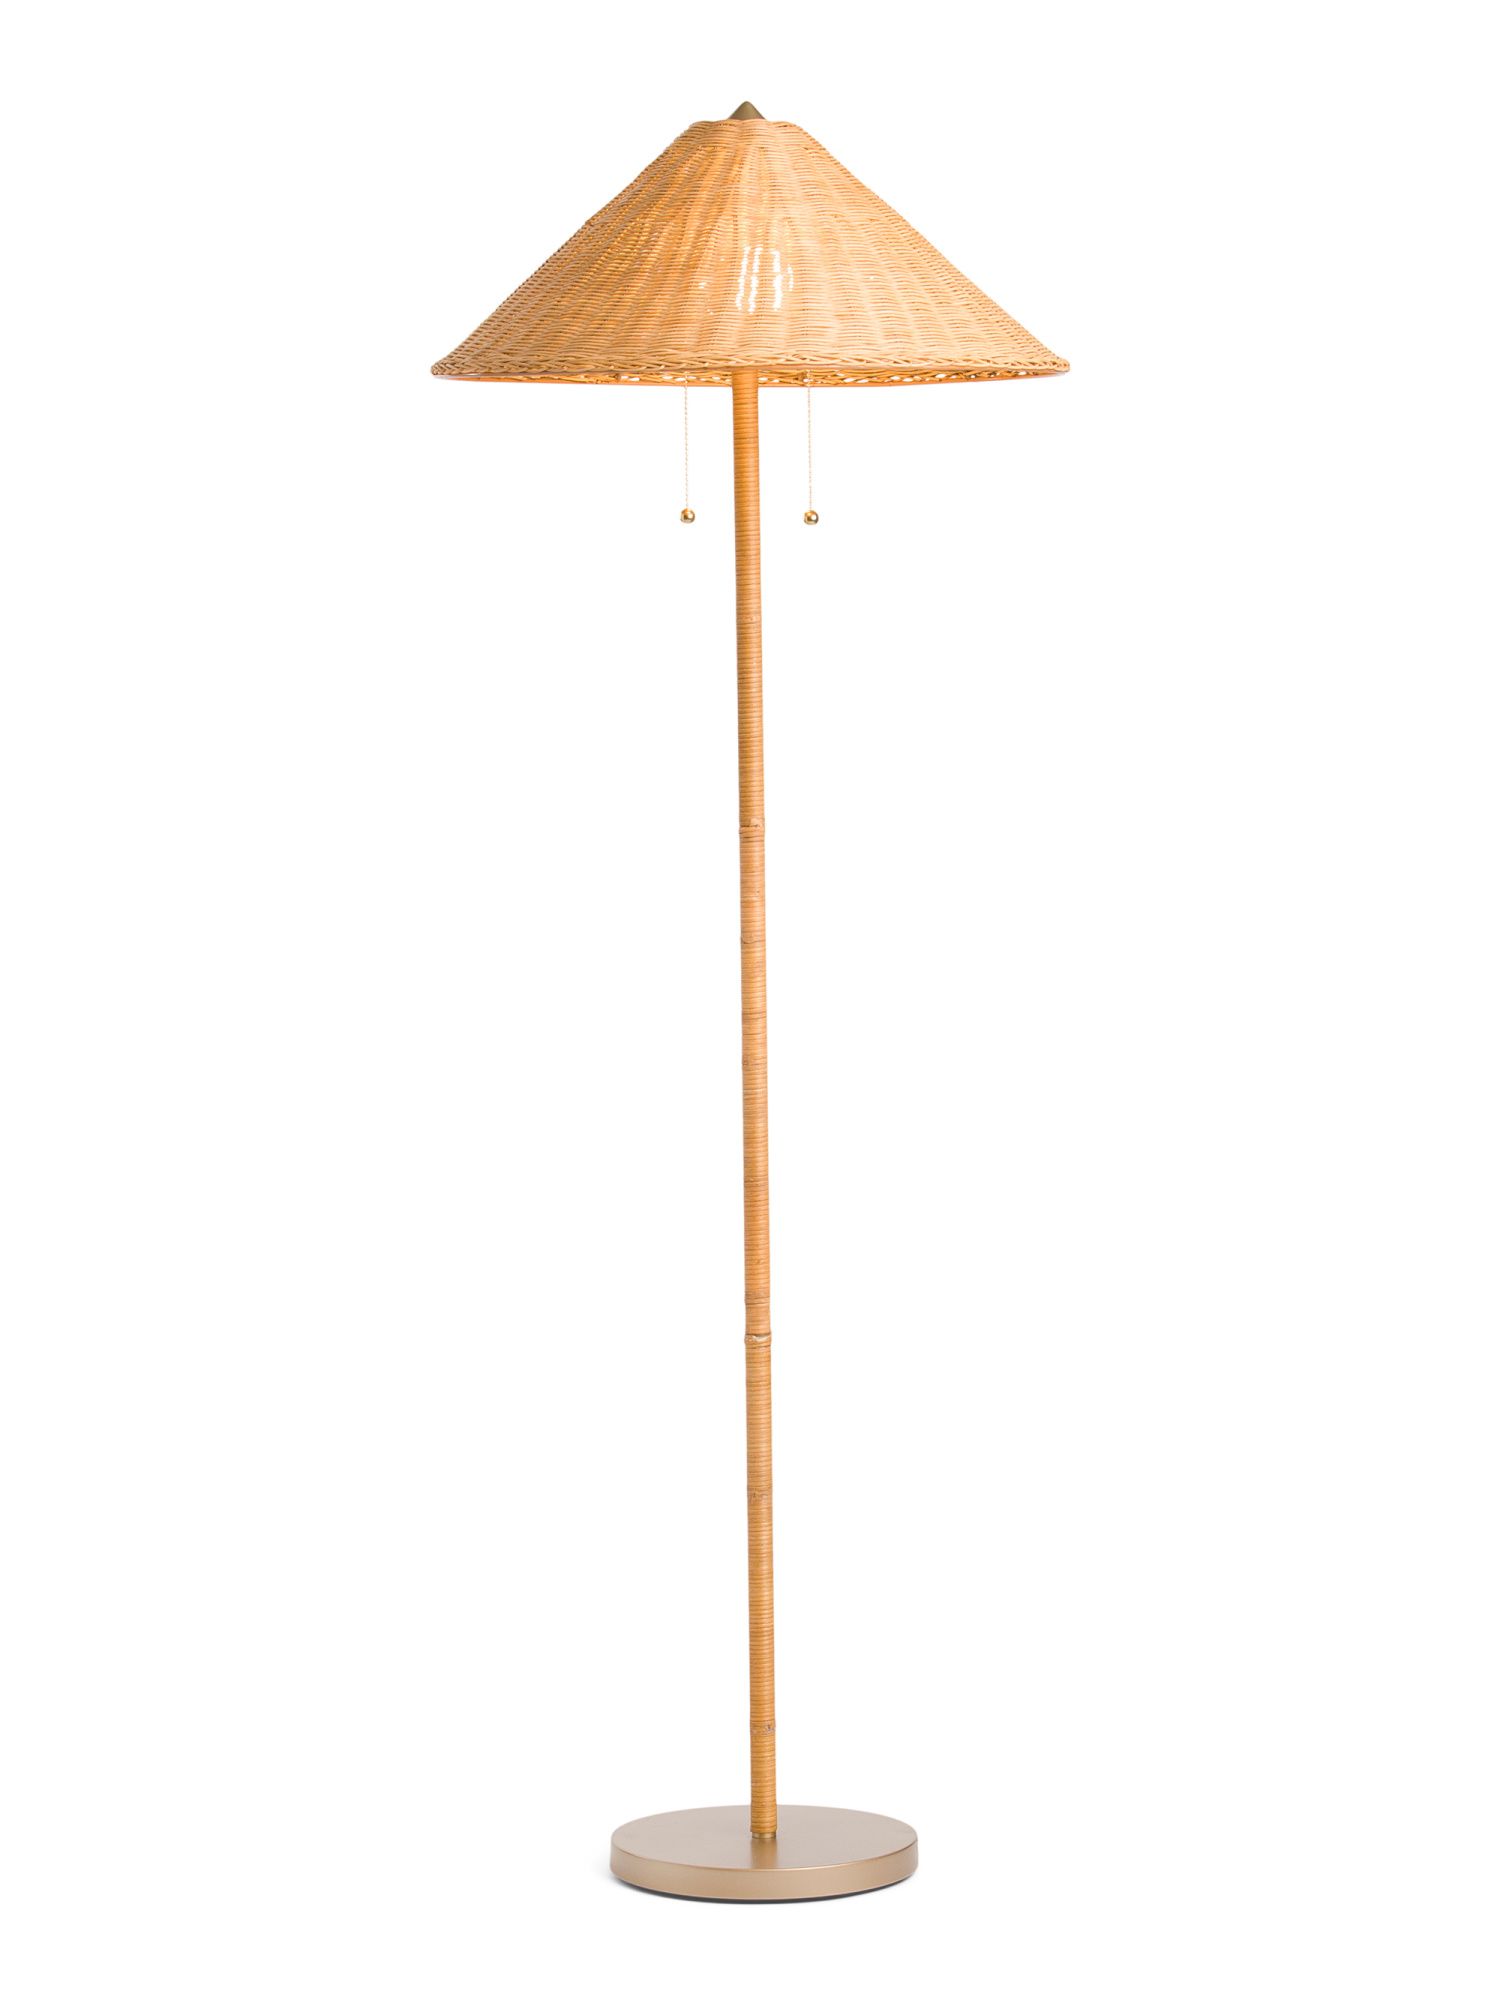 LILLIAN AUGUST
							
							63in Rattan Floor Lamp
						
						
							

	
		
						
							$9... | Marshalls